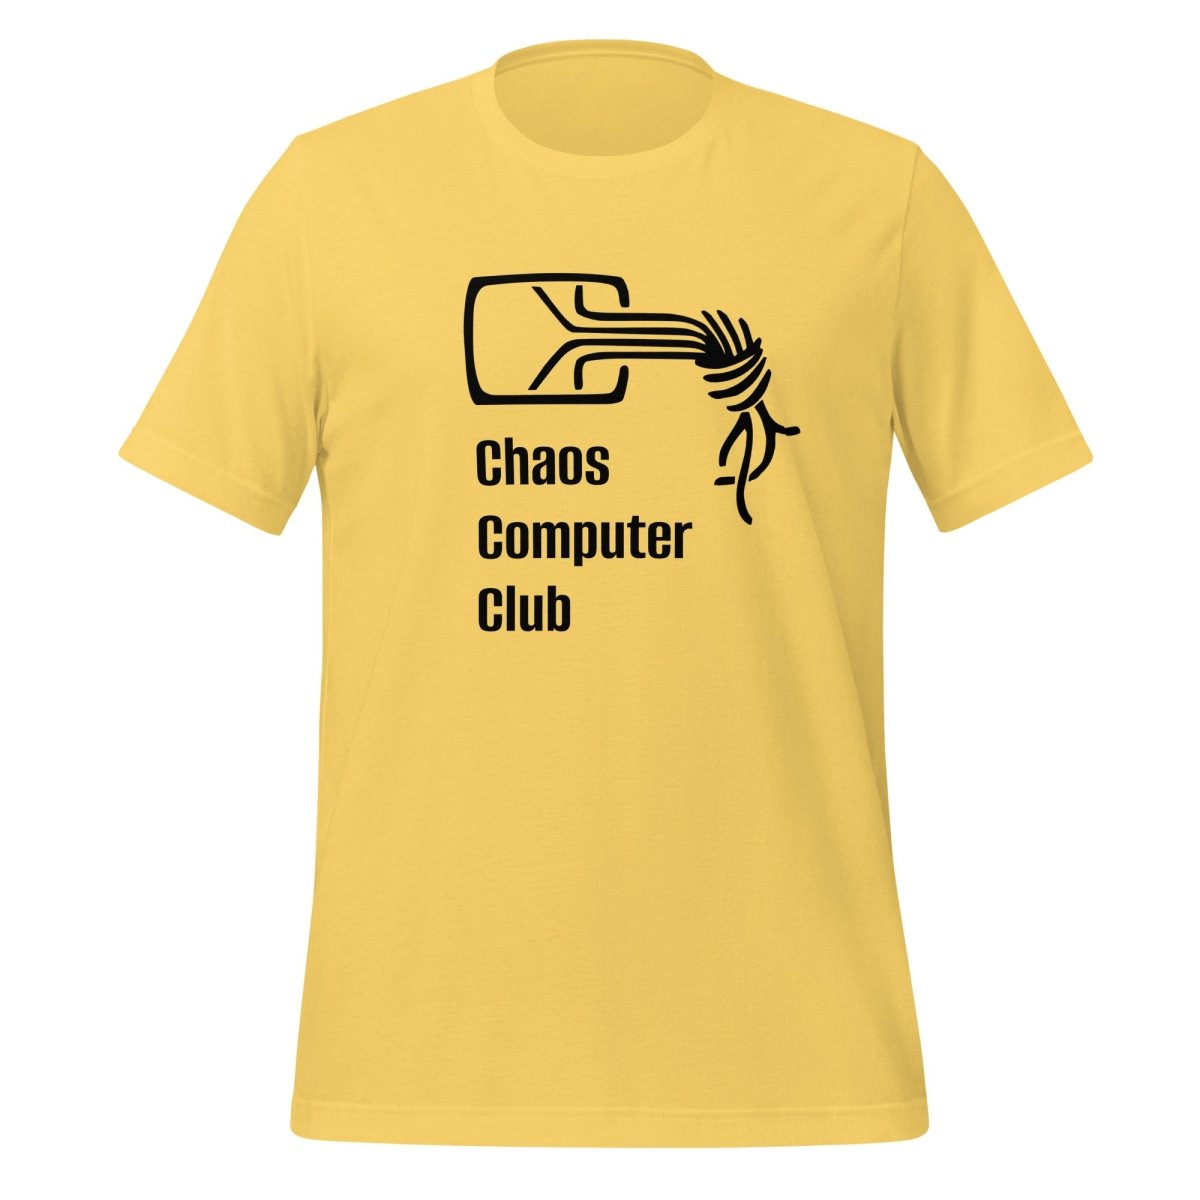 Chaos Computer Club Light T - Shirt (unisex) - Yellow - AI Store